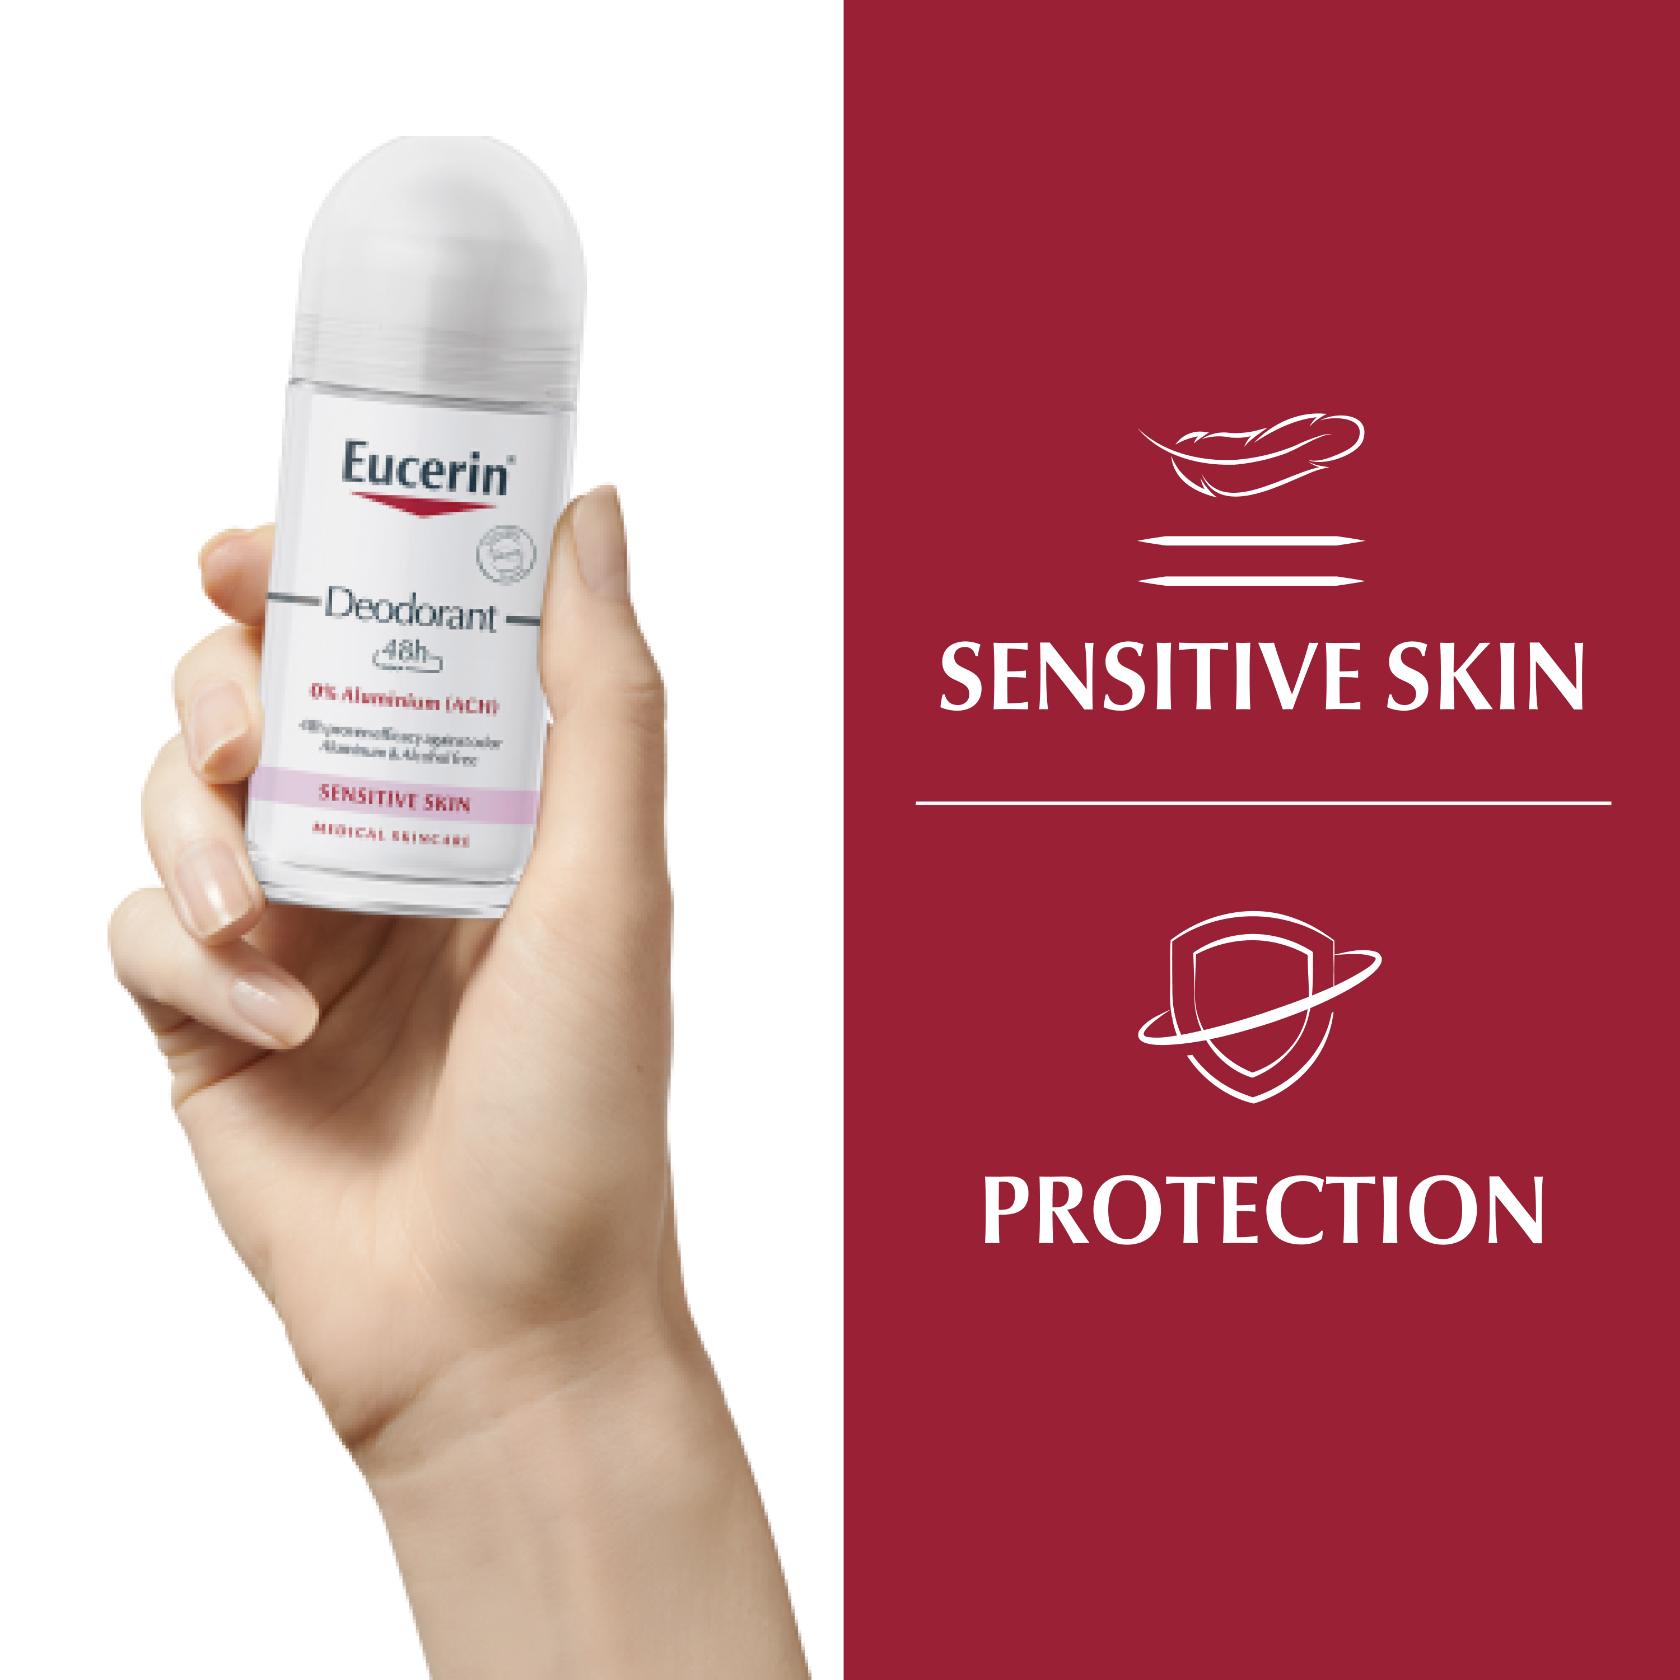 Eucerin Deodorant Sensitive Skin 48h 0% Aluminum Roll-On 50ml